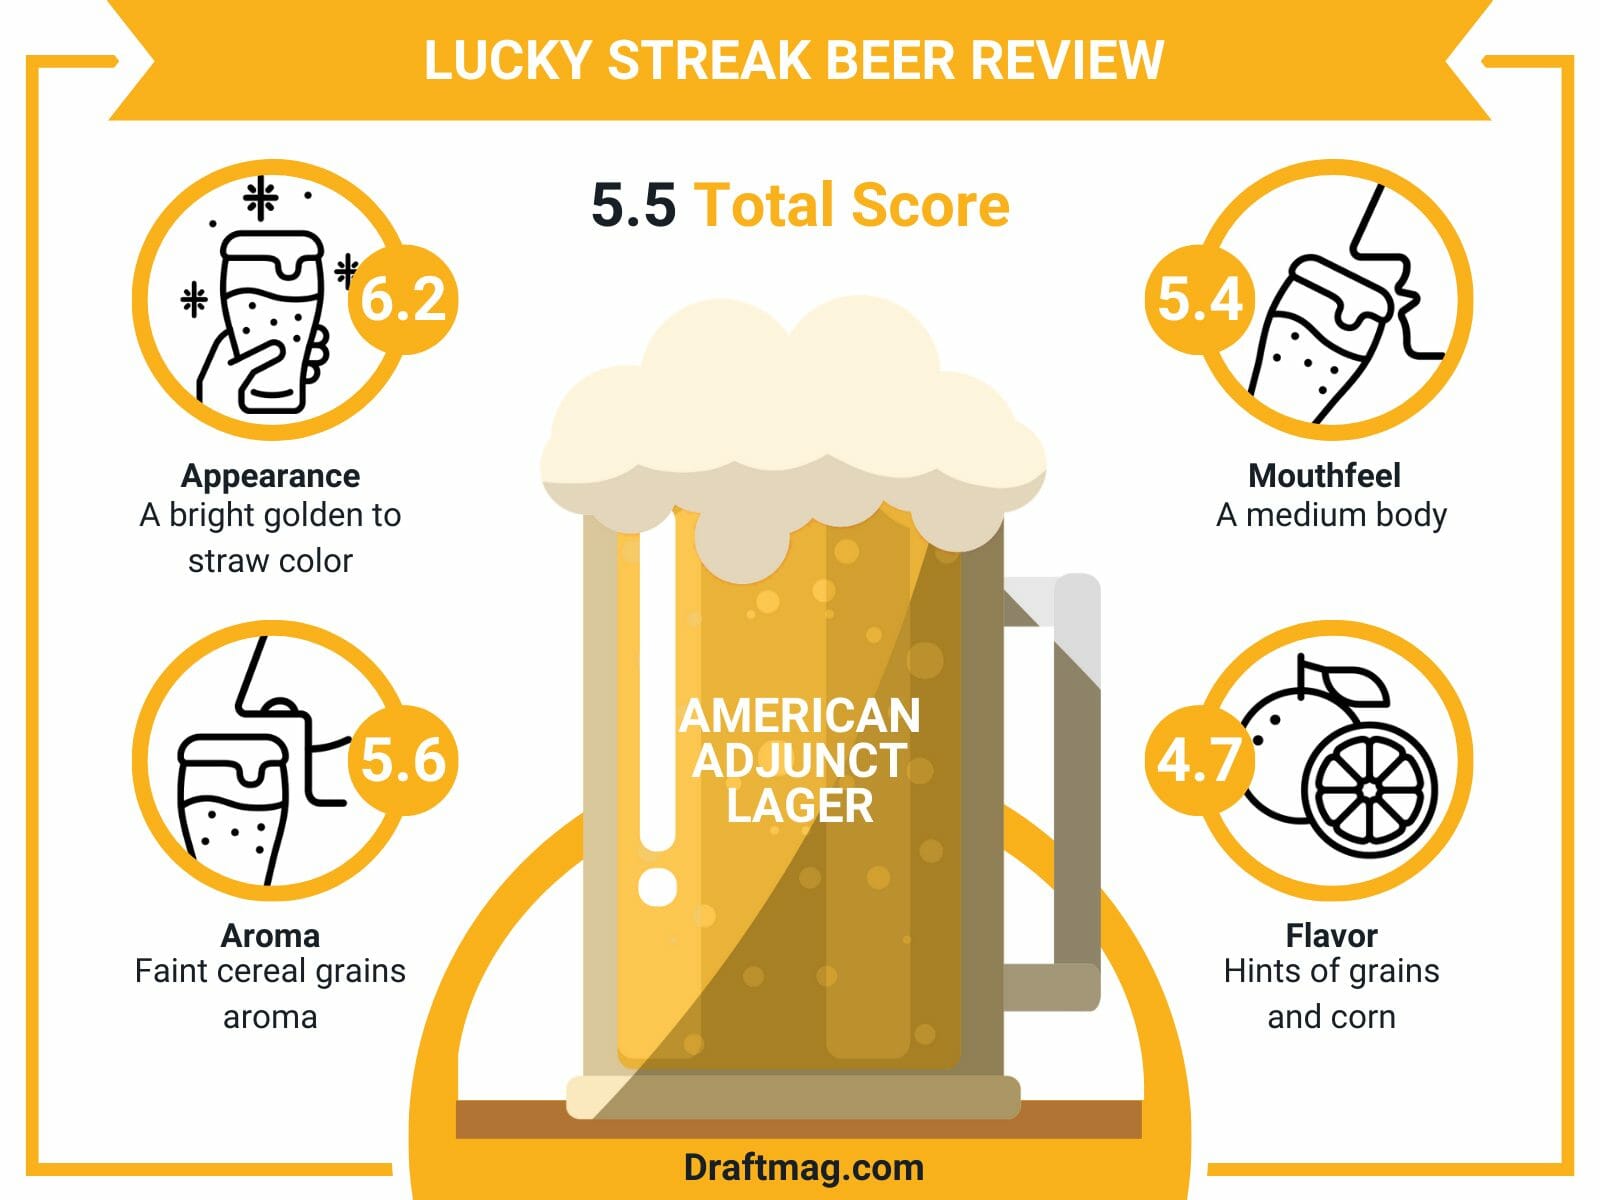 Lucky streak beer review infographic